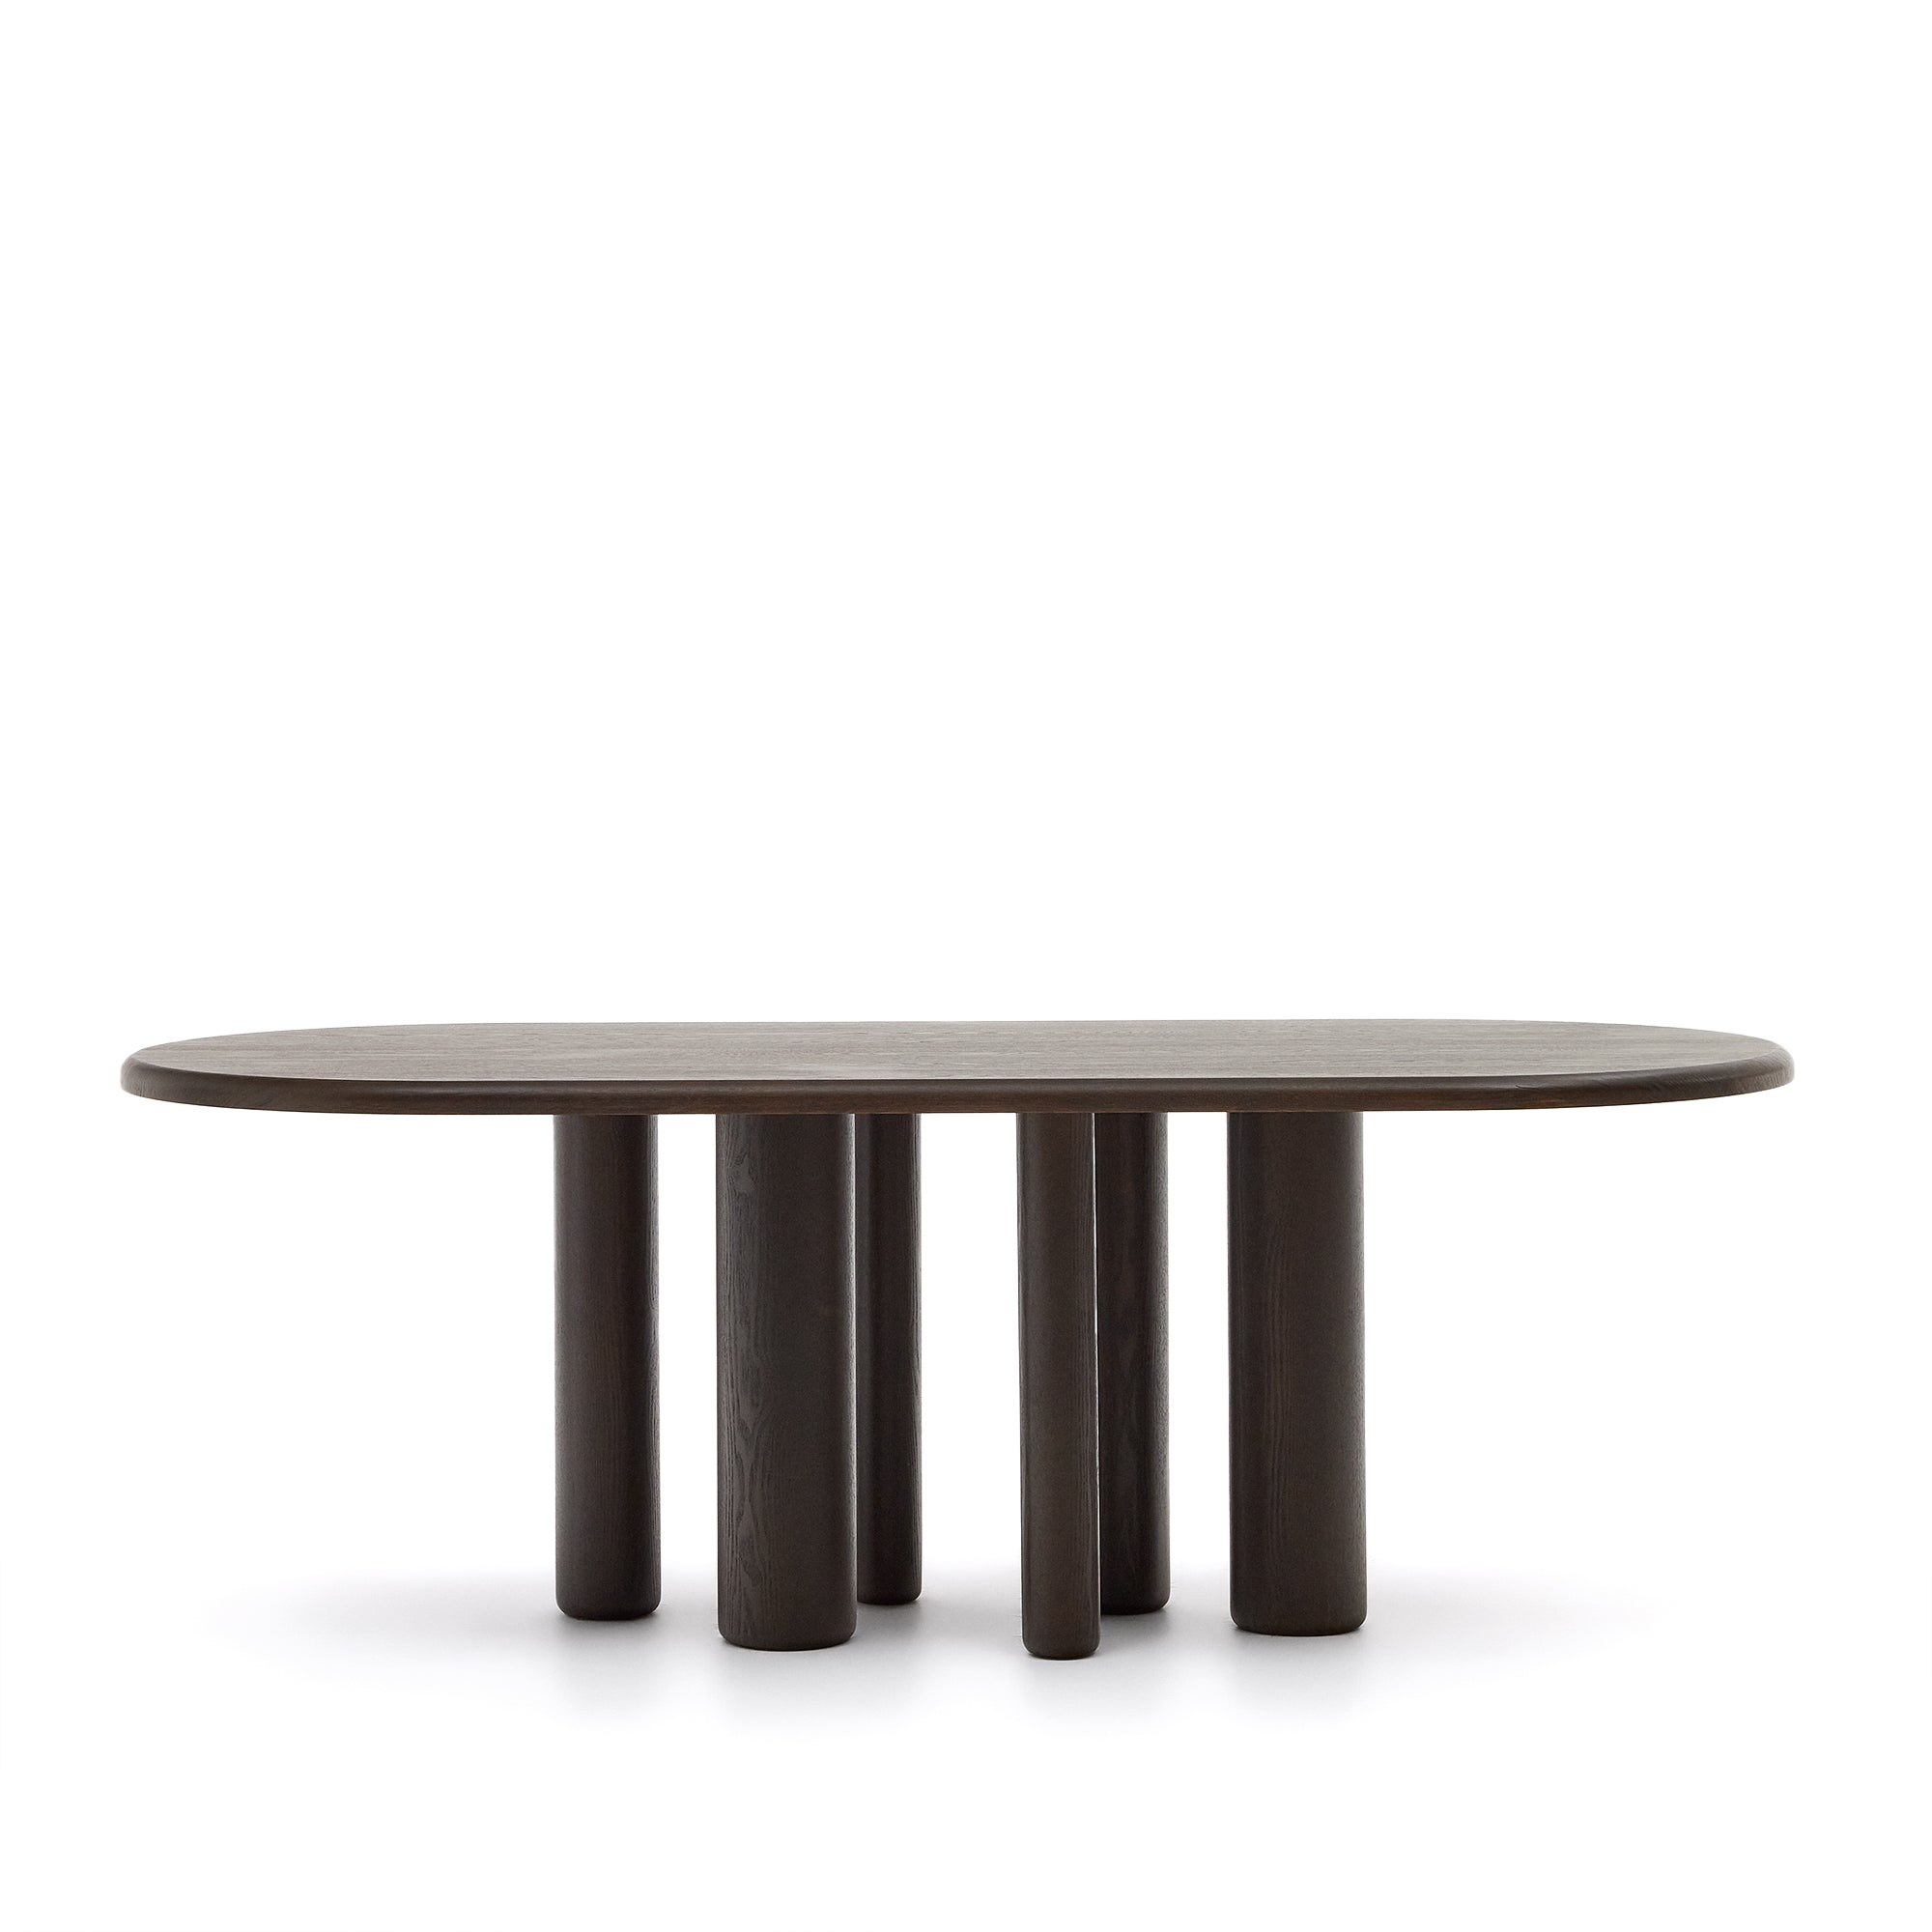 Mailen oval table in ash wood veneer with dark finish, Ø 220 x 105 cm